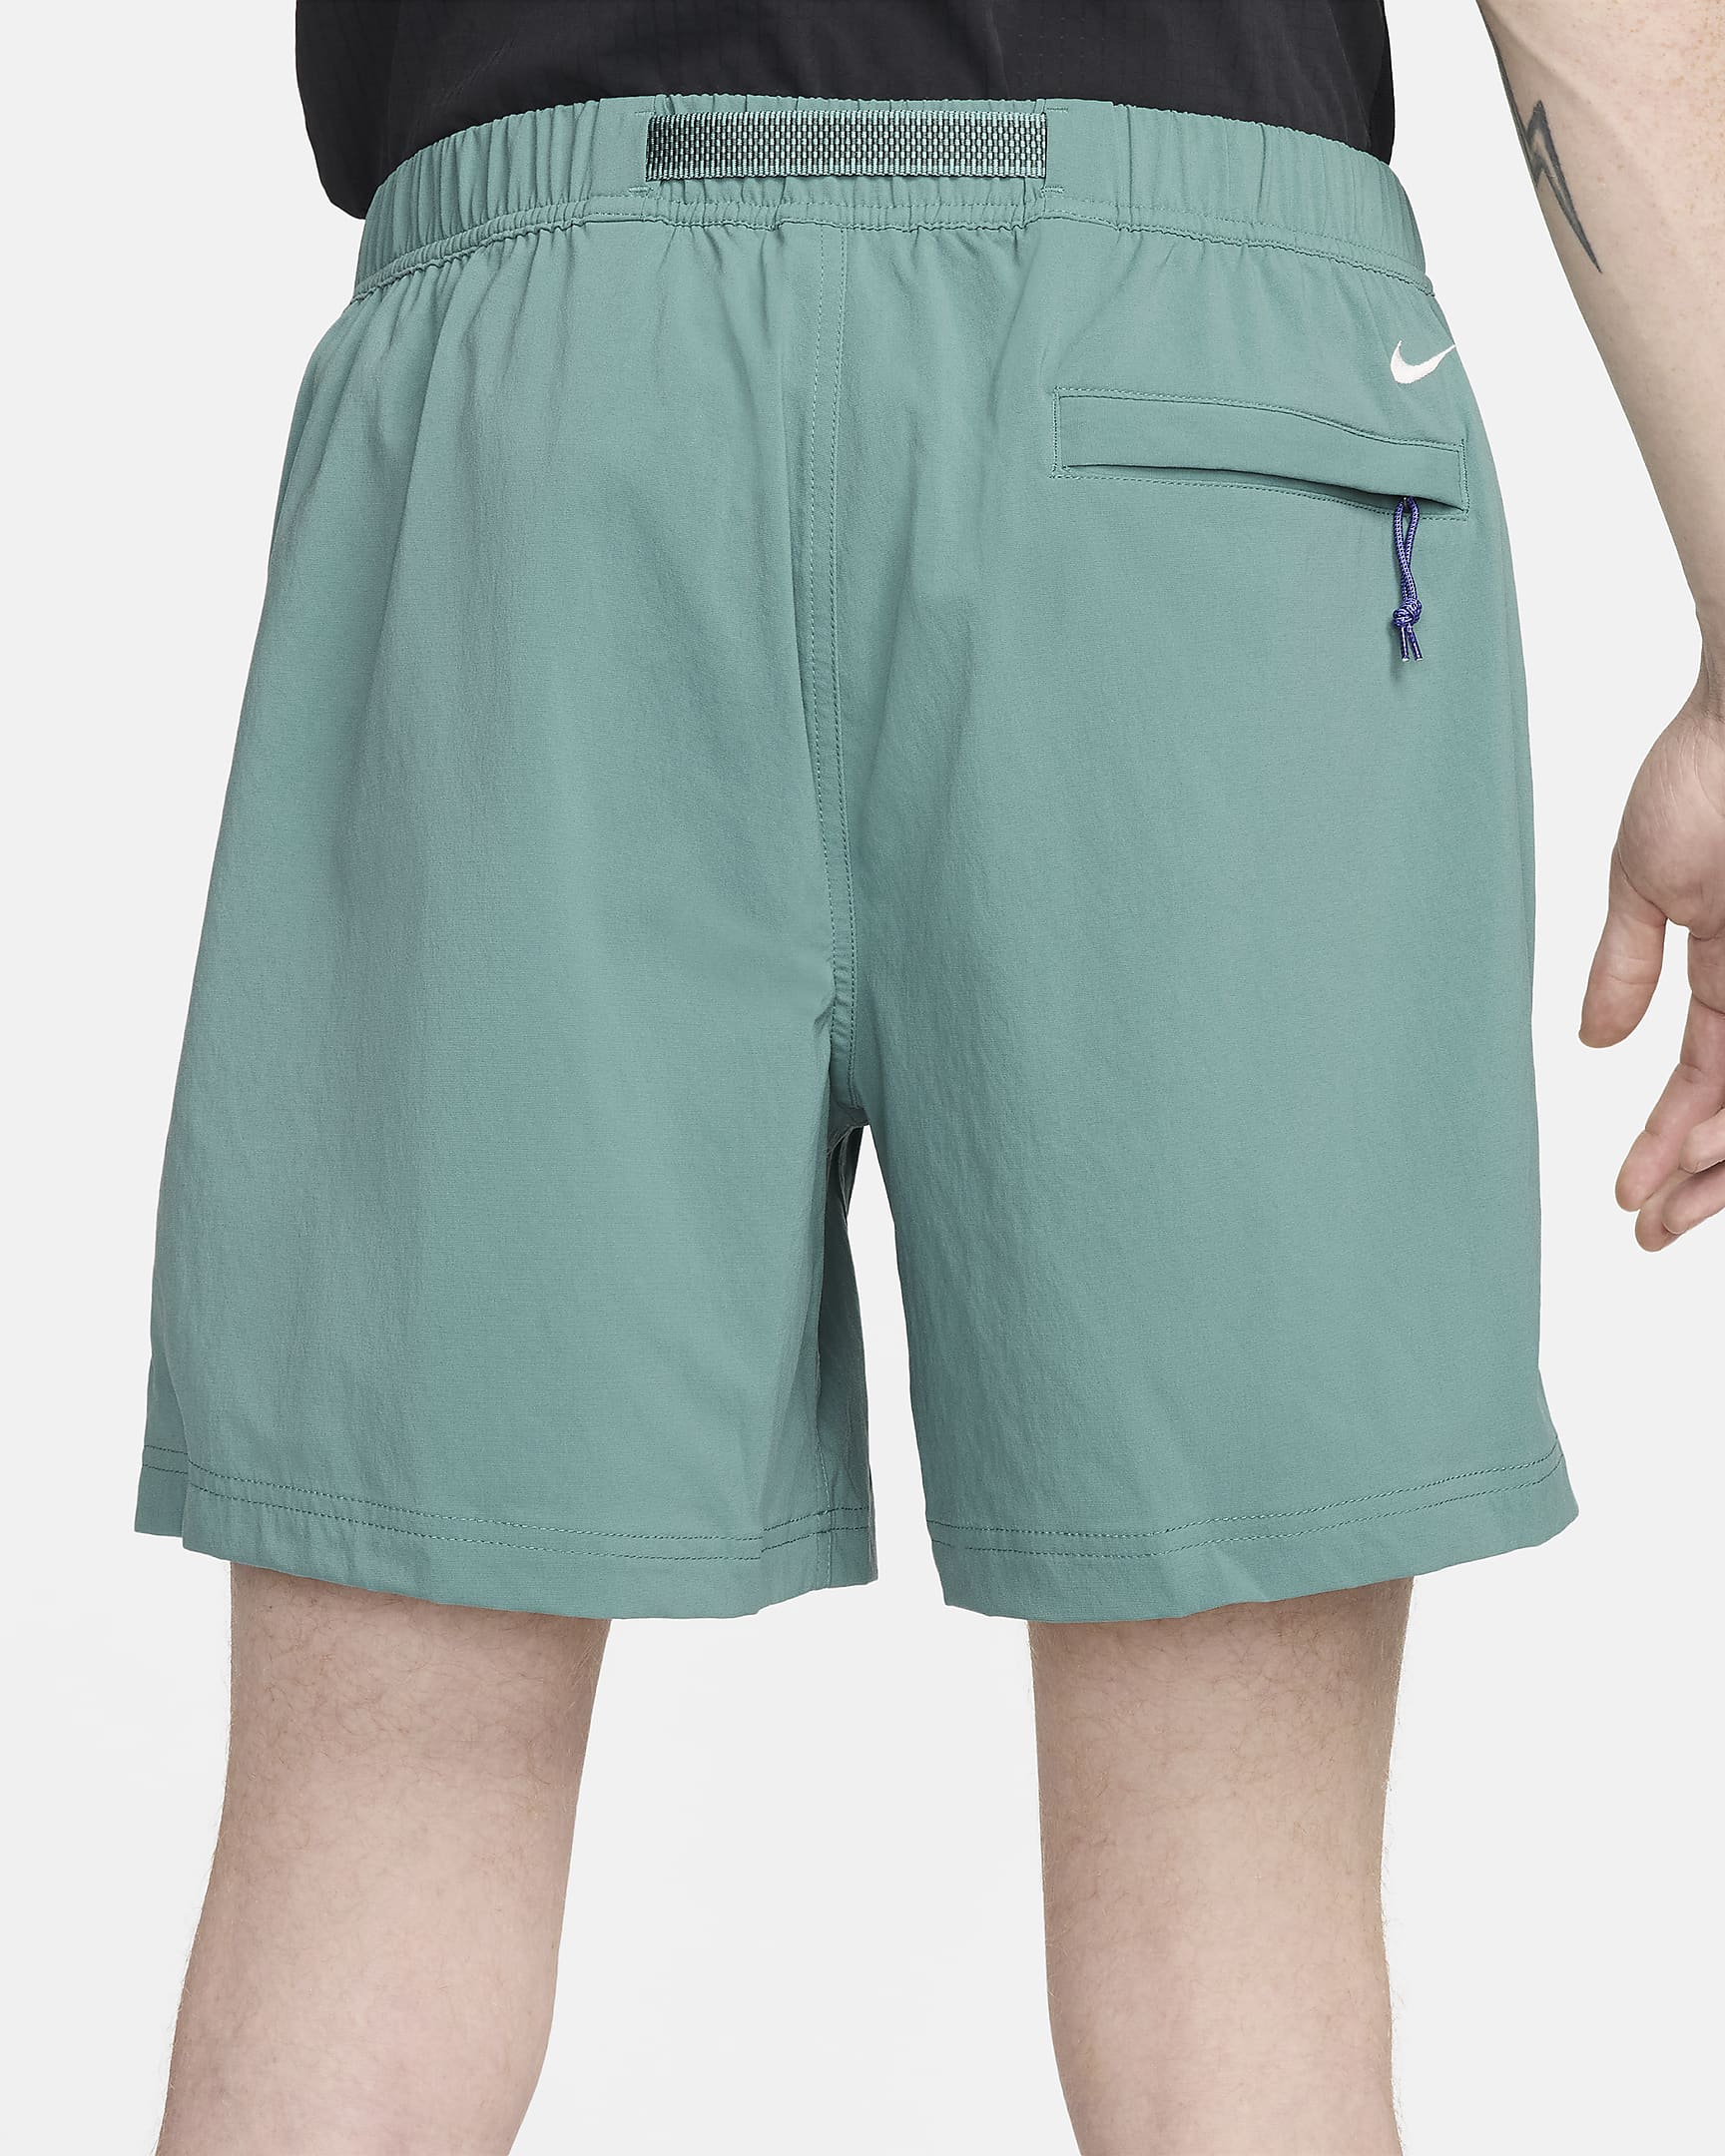 Nike ACG Men's Hiking Shorts - Bicoastal/Vintage Green/Summit White